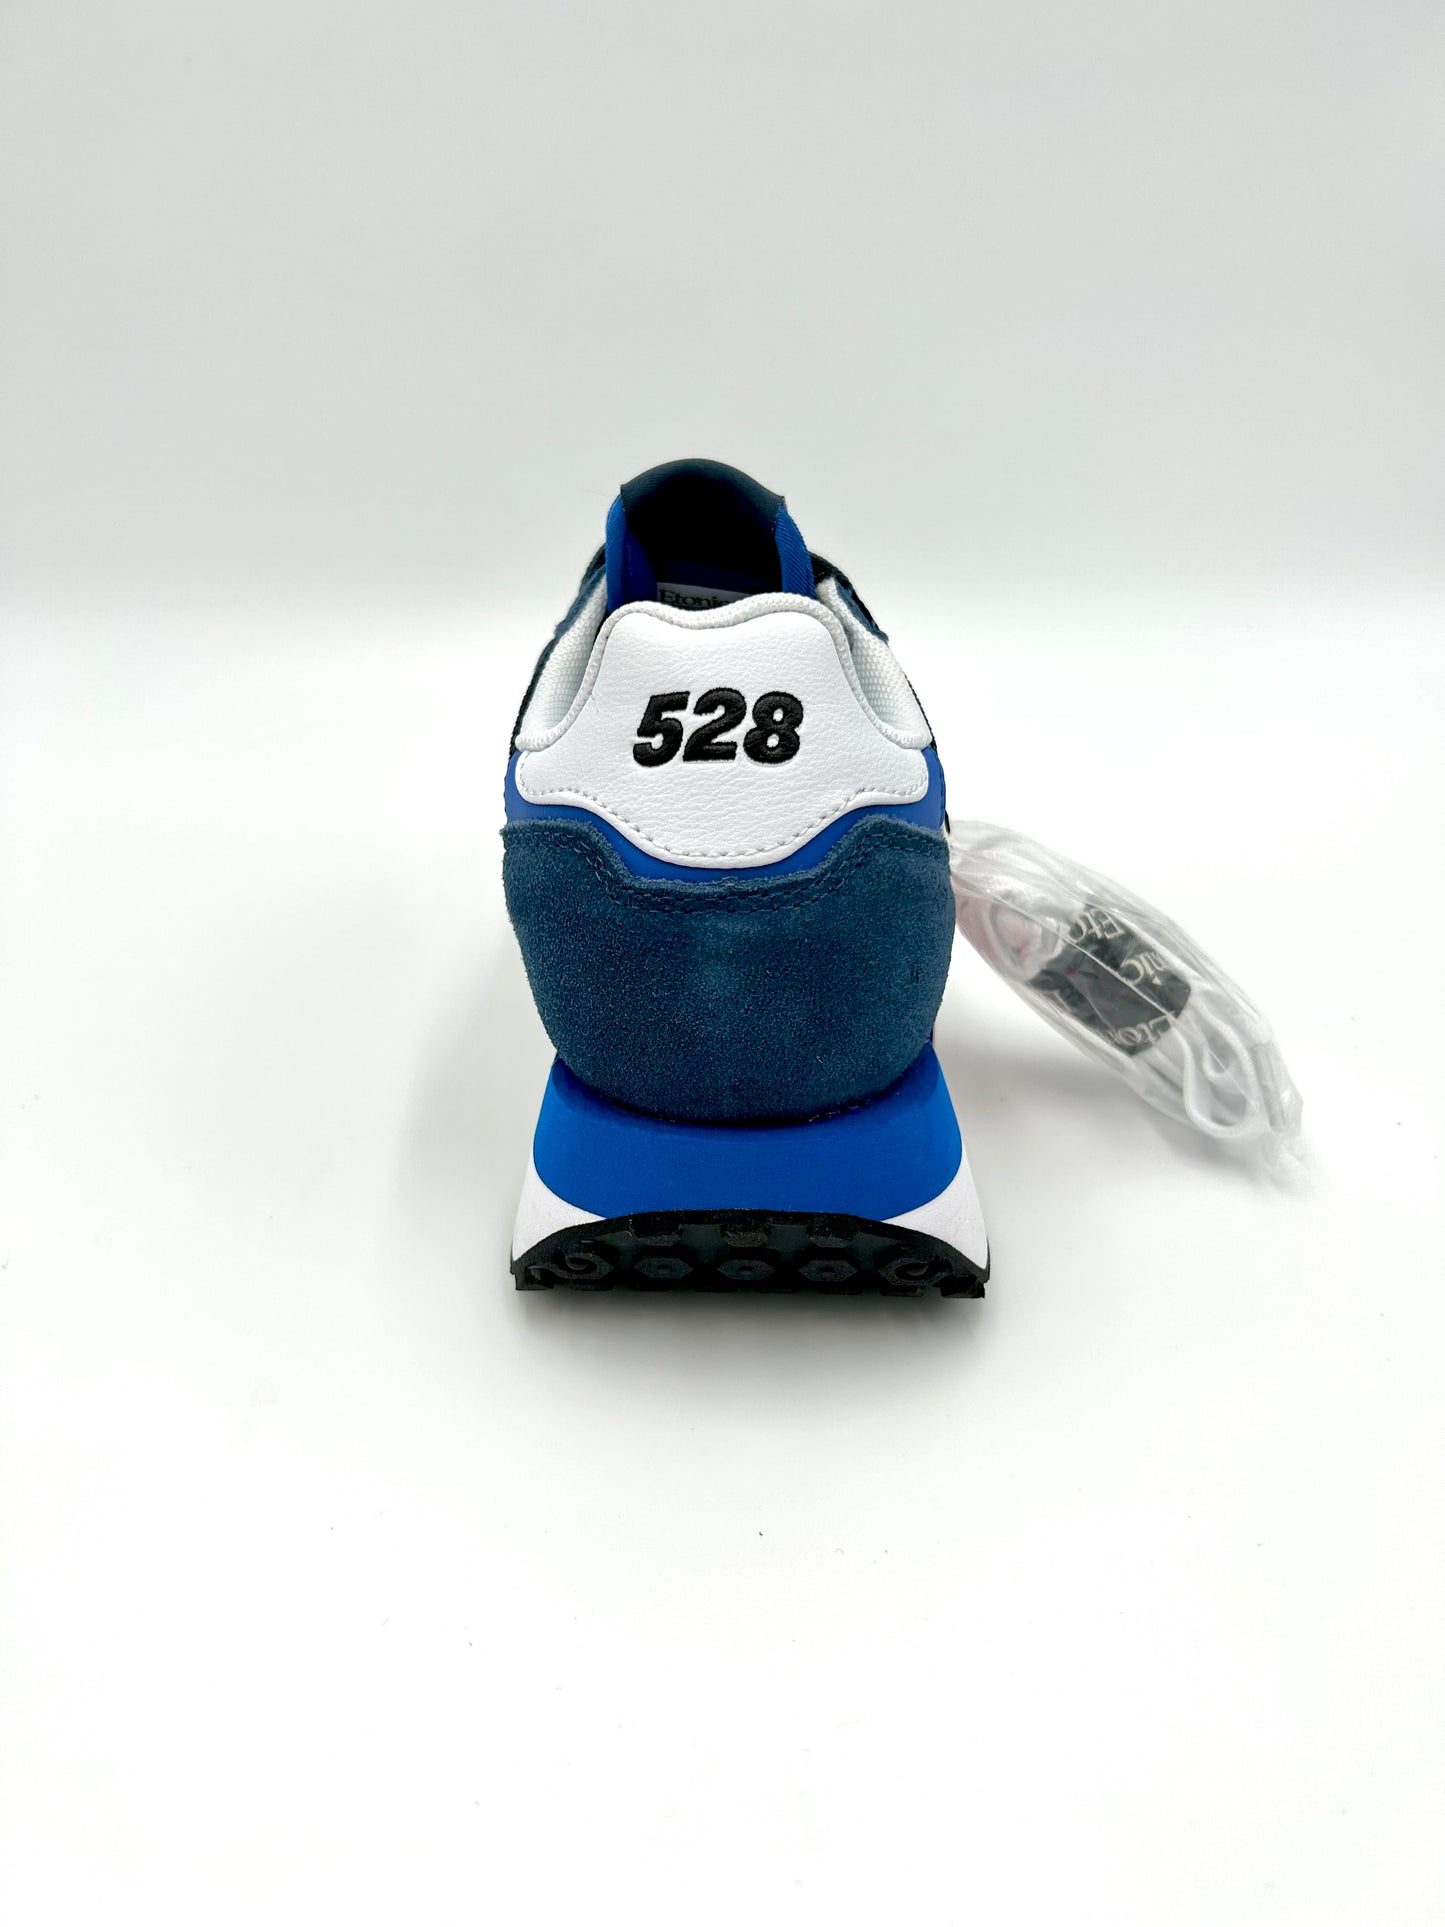 Etonic Sneakers MAESTRO ETM 215640 KM528 - blue and black - Etonic